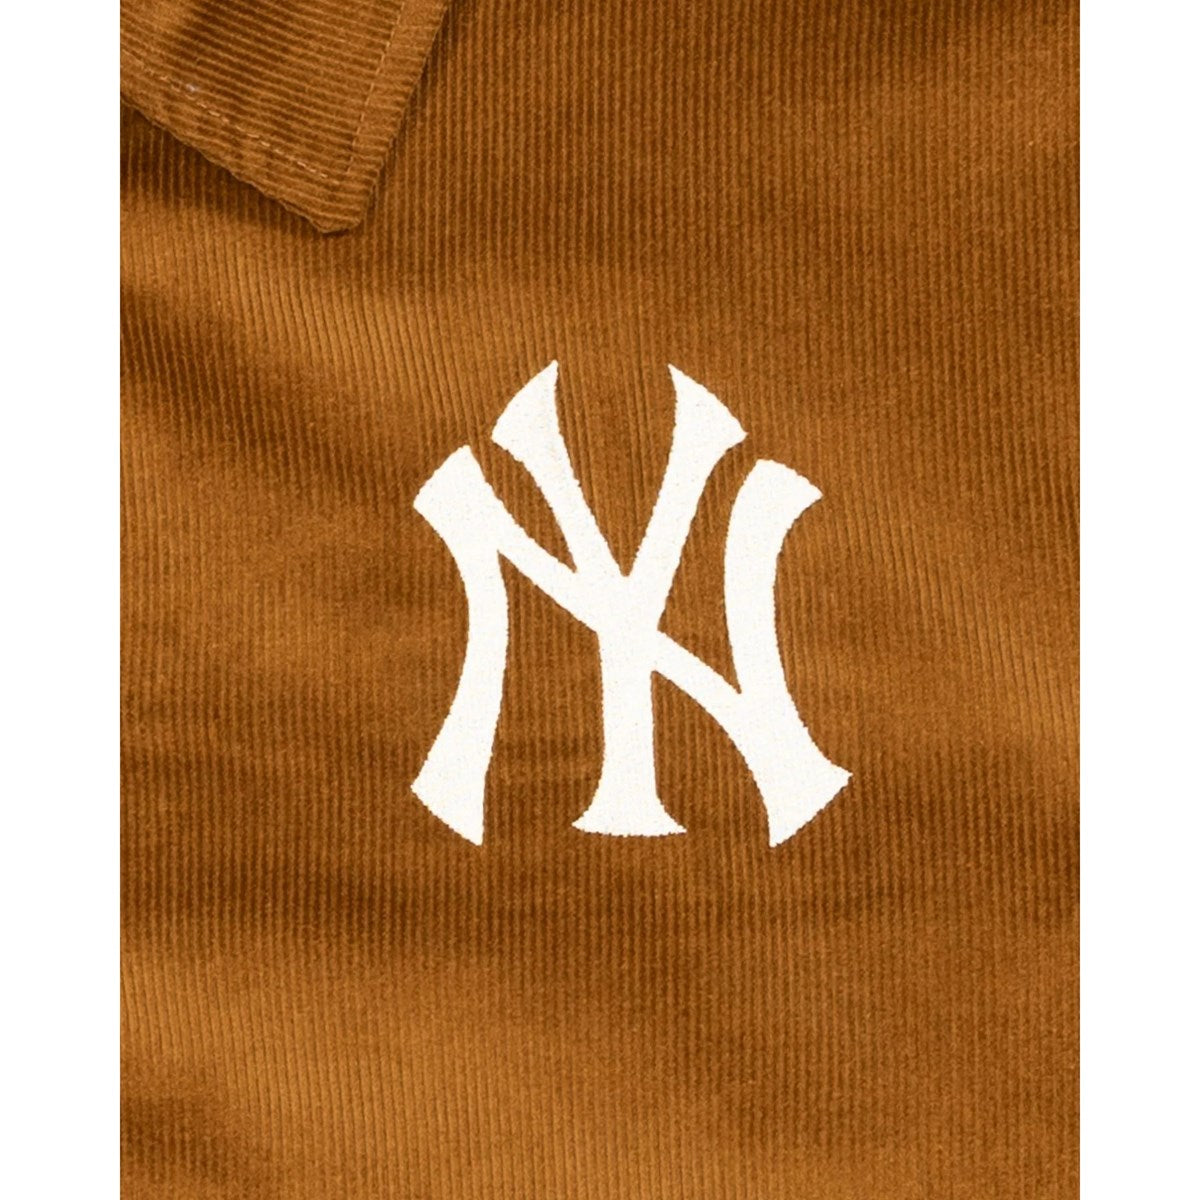 NEW ERA New York Yankees - CORD JACKET